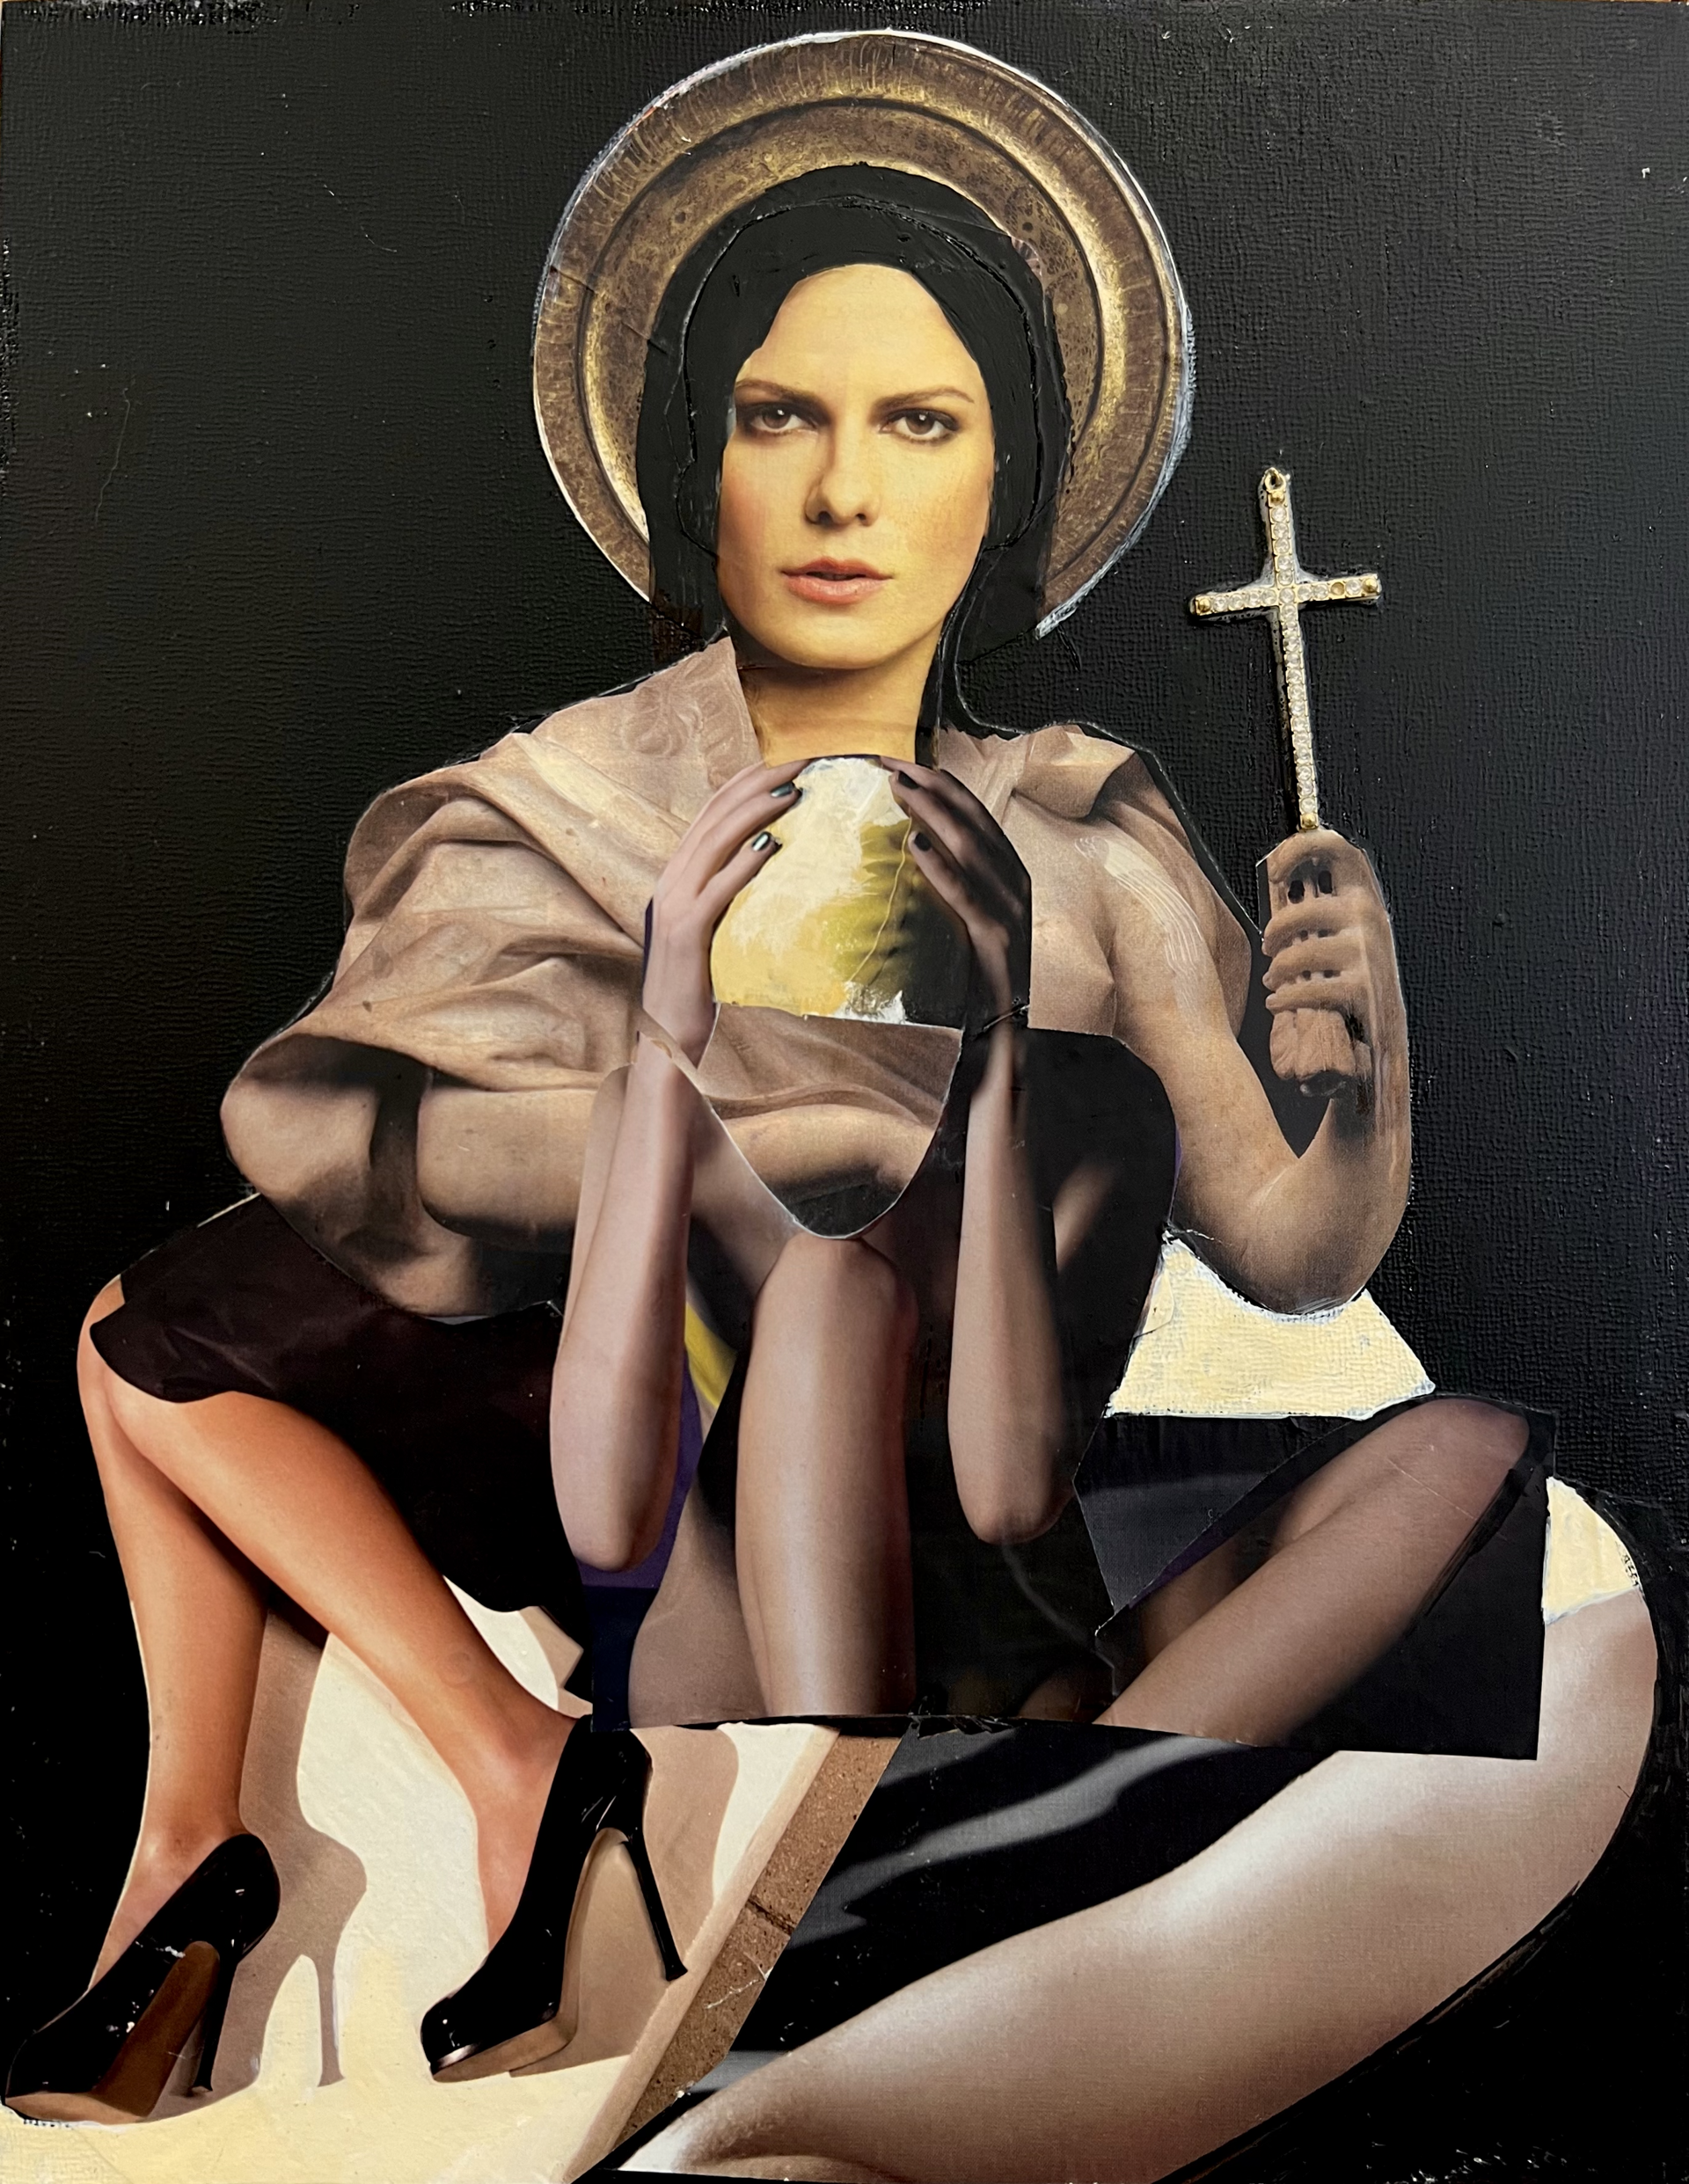 The Saint by Florin Firimita